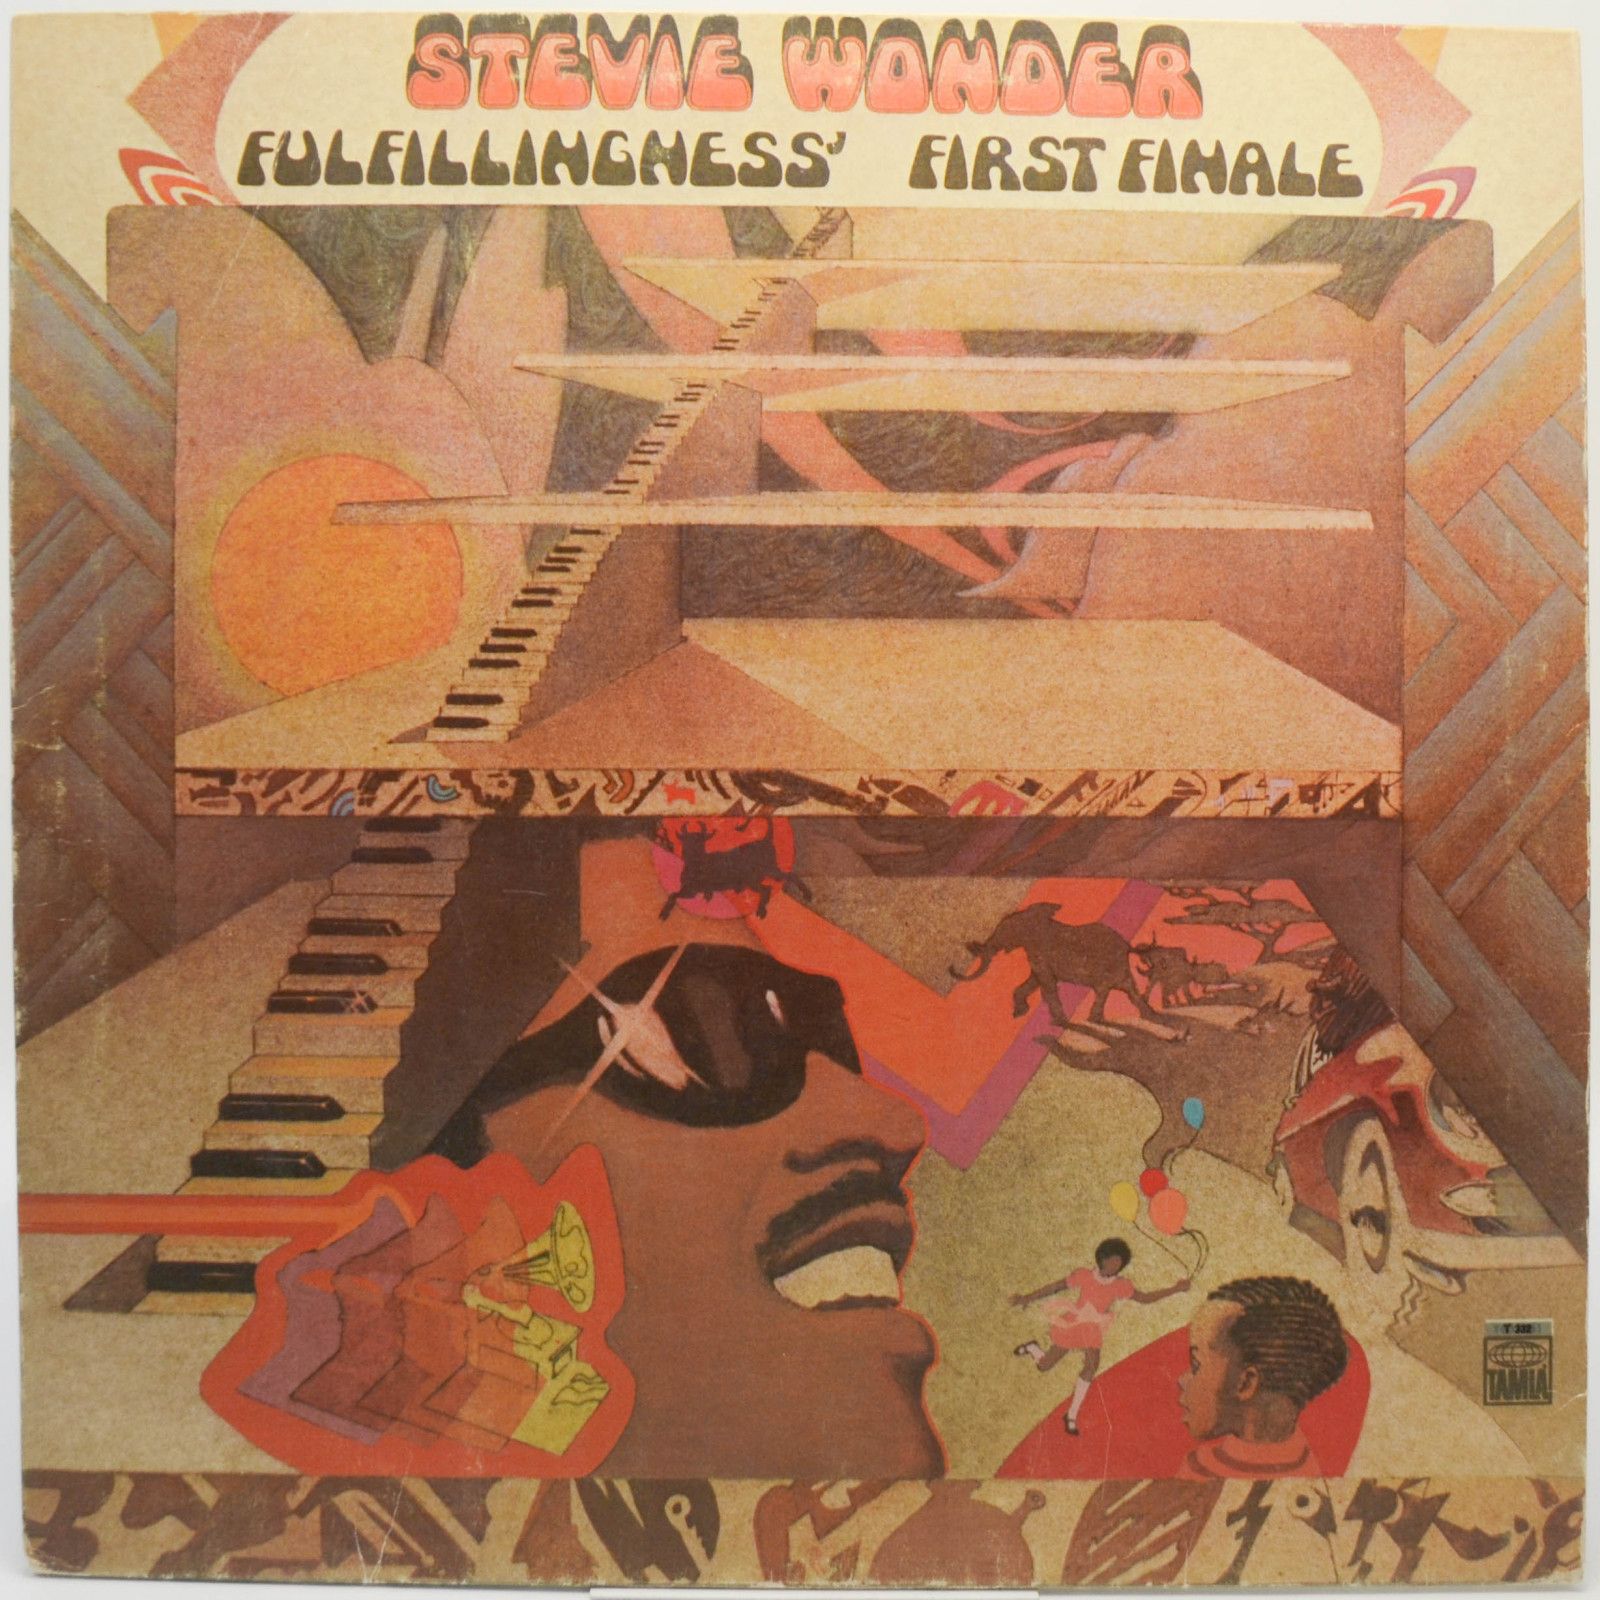 Stevie Wonder — Fulfillingness' First Finale, 1974